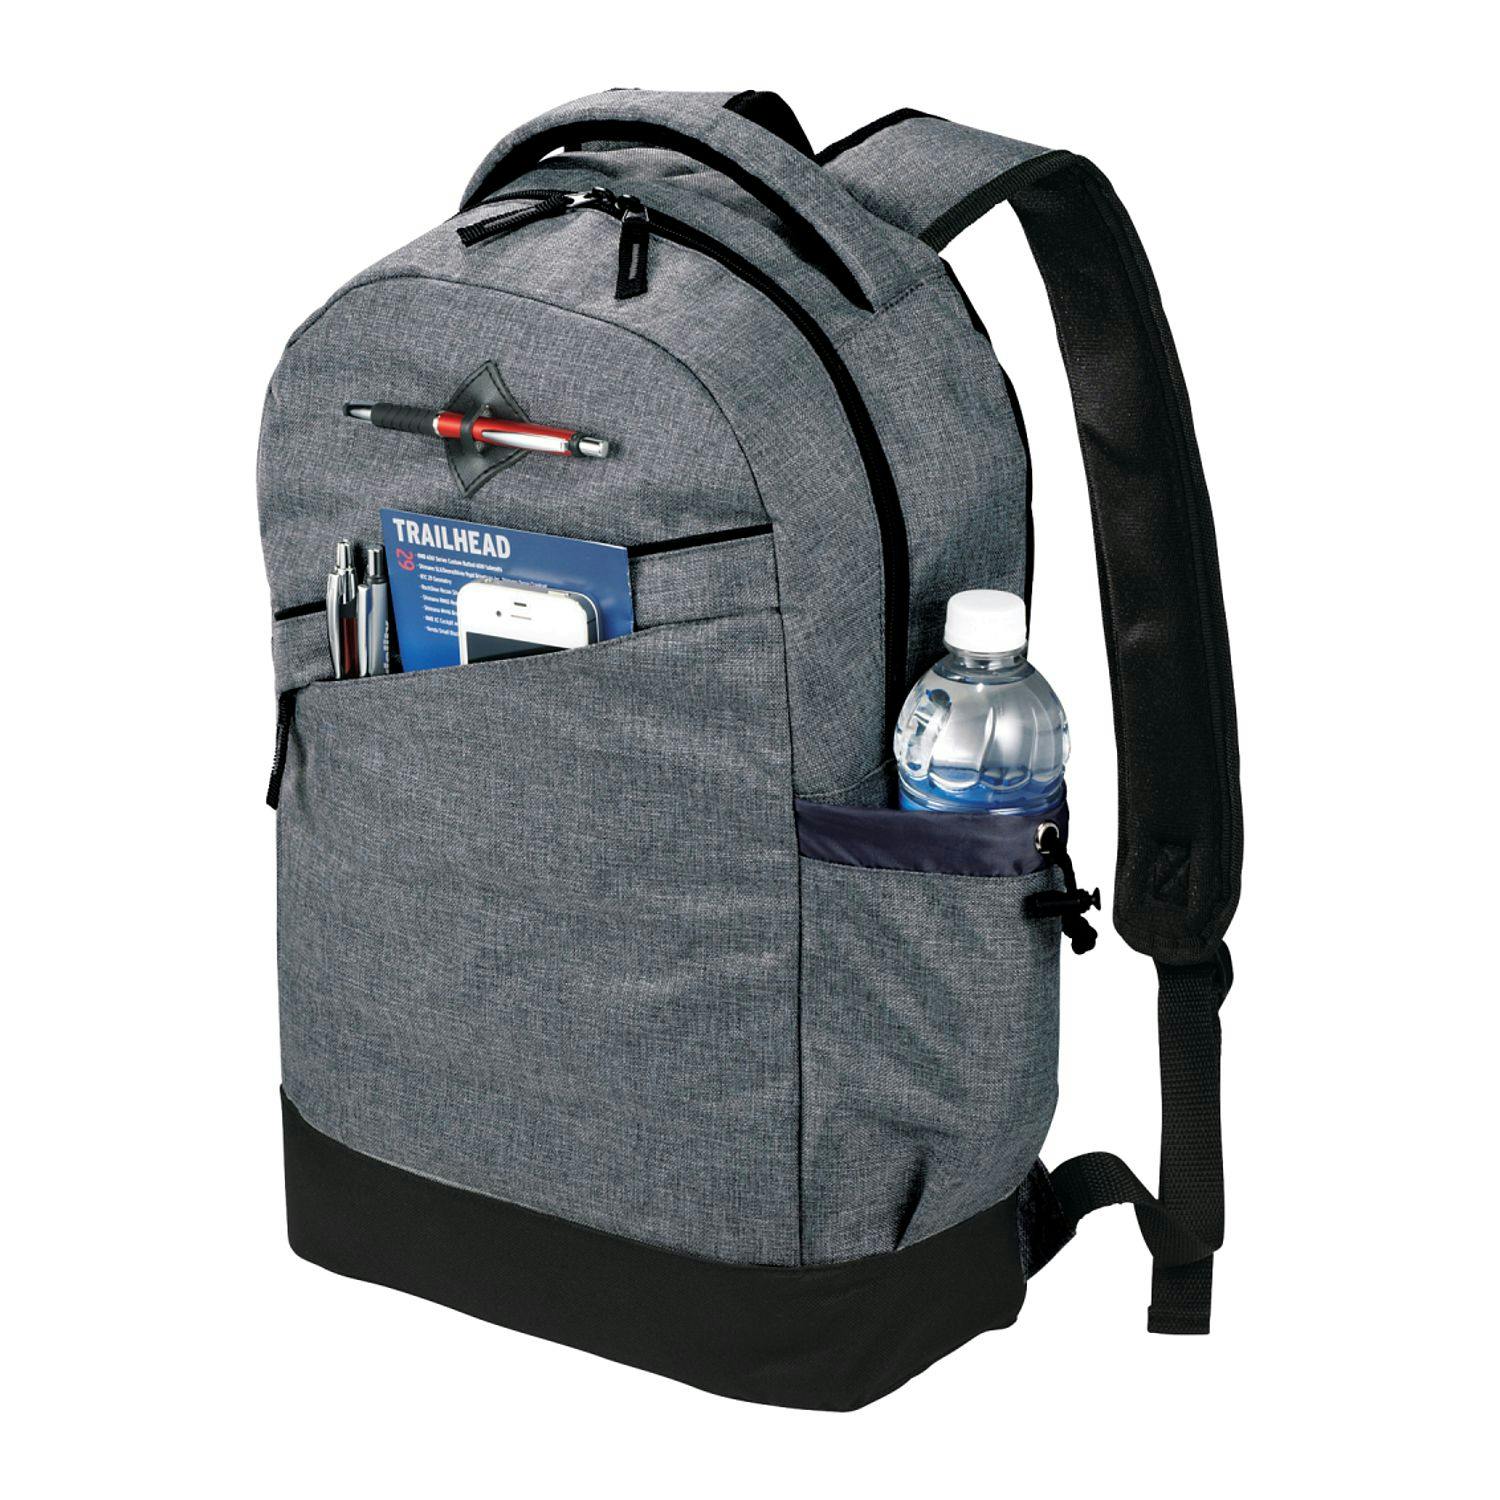 Graphite Slim 15" Computer Backpack - additional Image 1